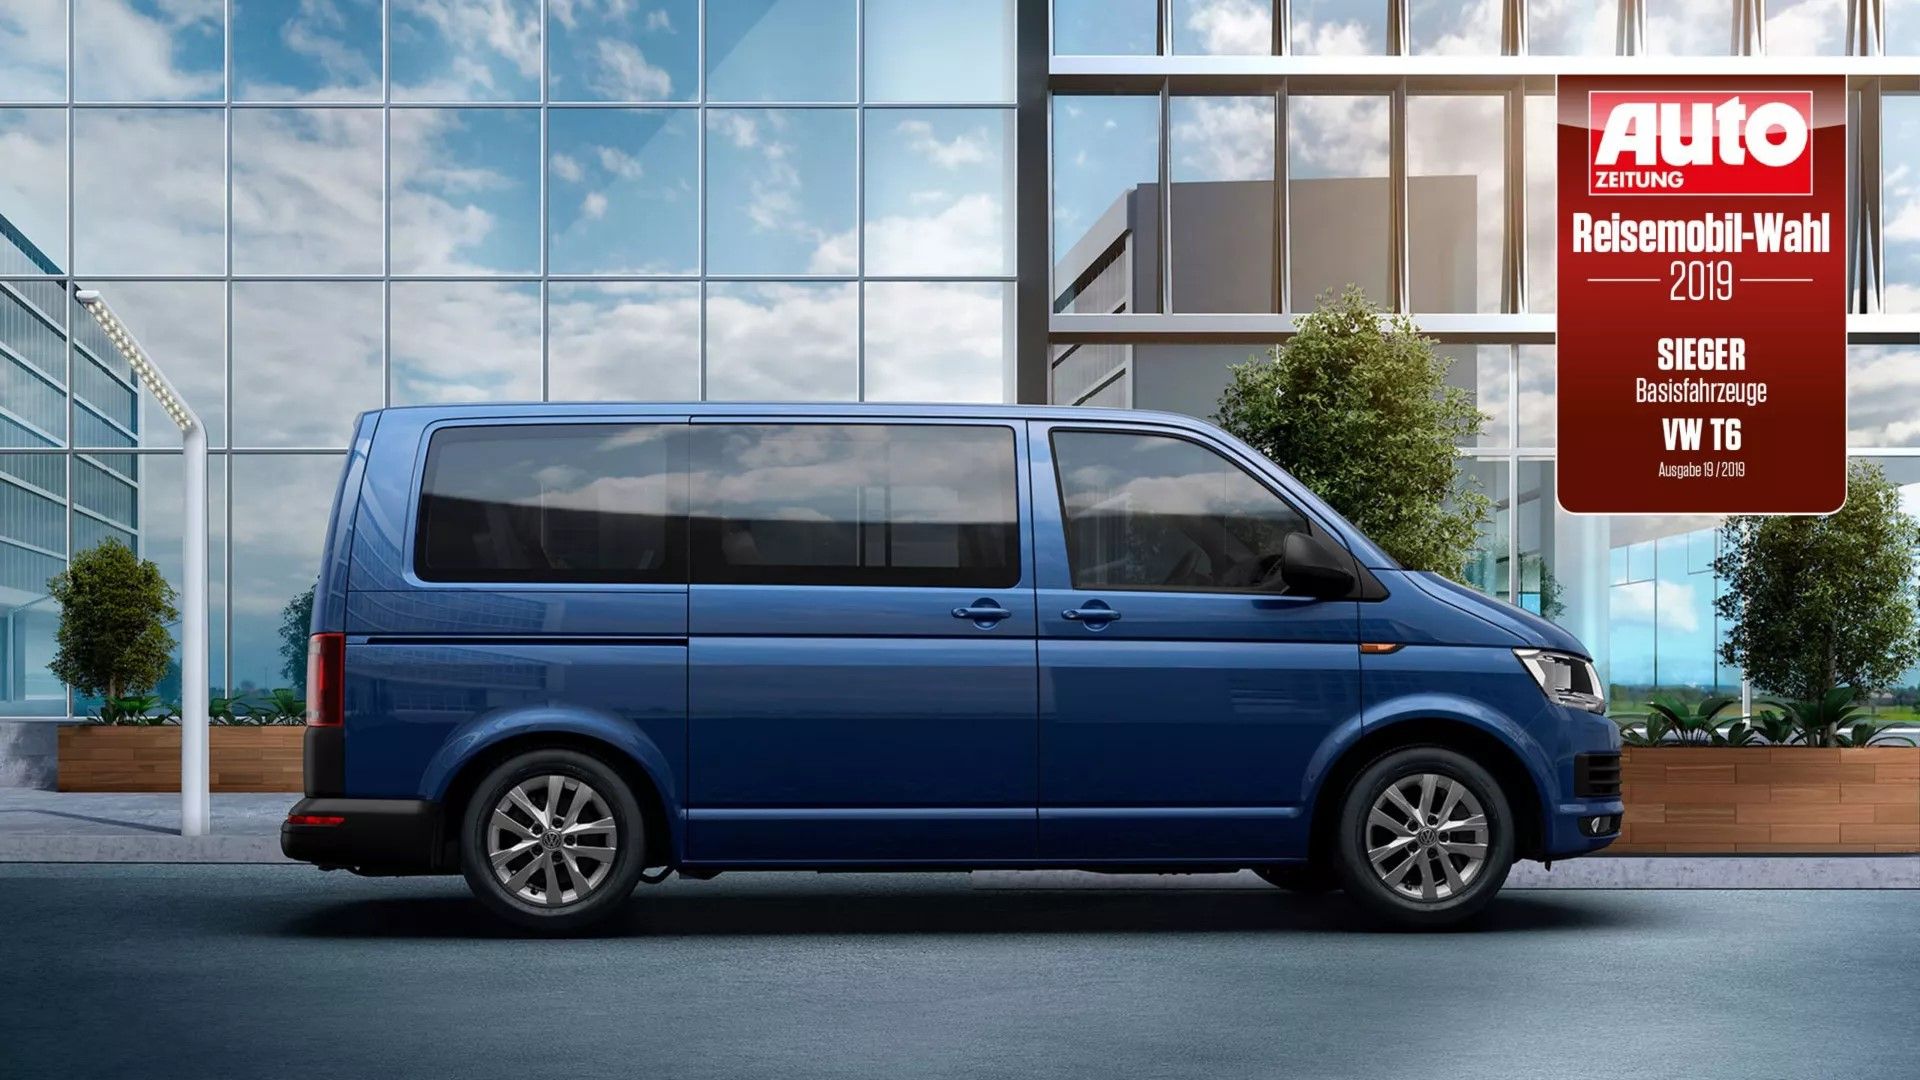 Reisemobil-Wahl Basisfahrzeuge 2019: Der VW California 6.1